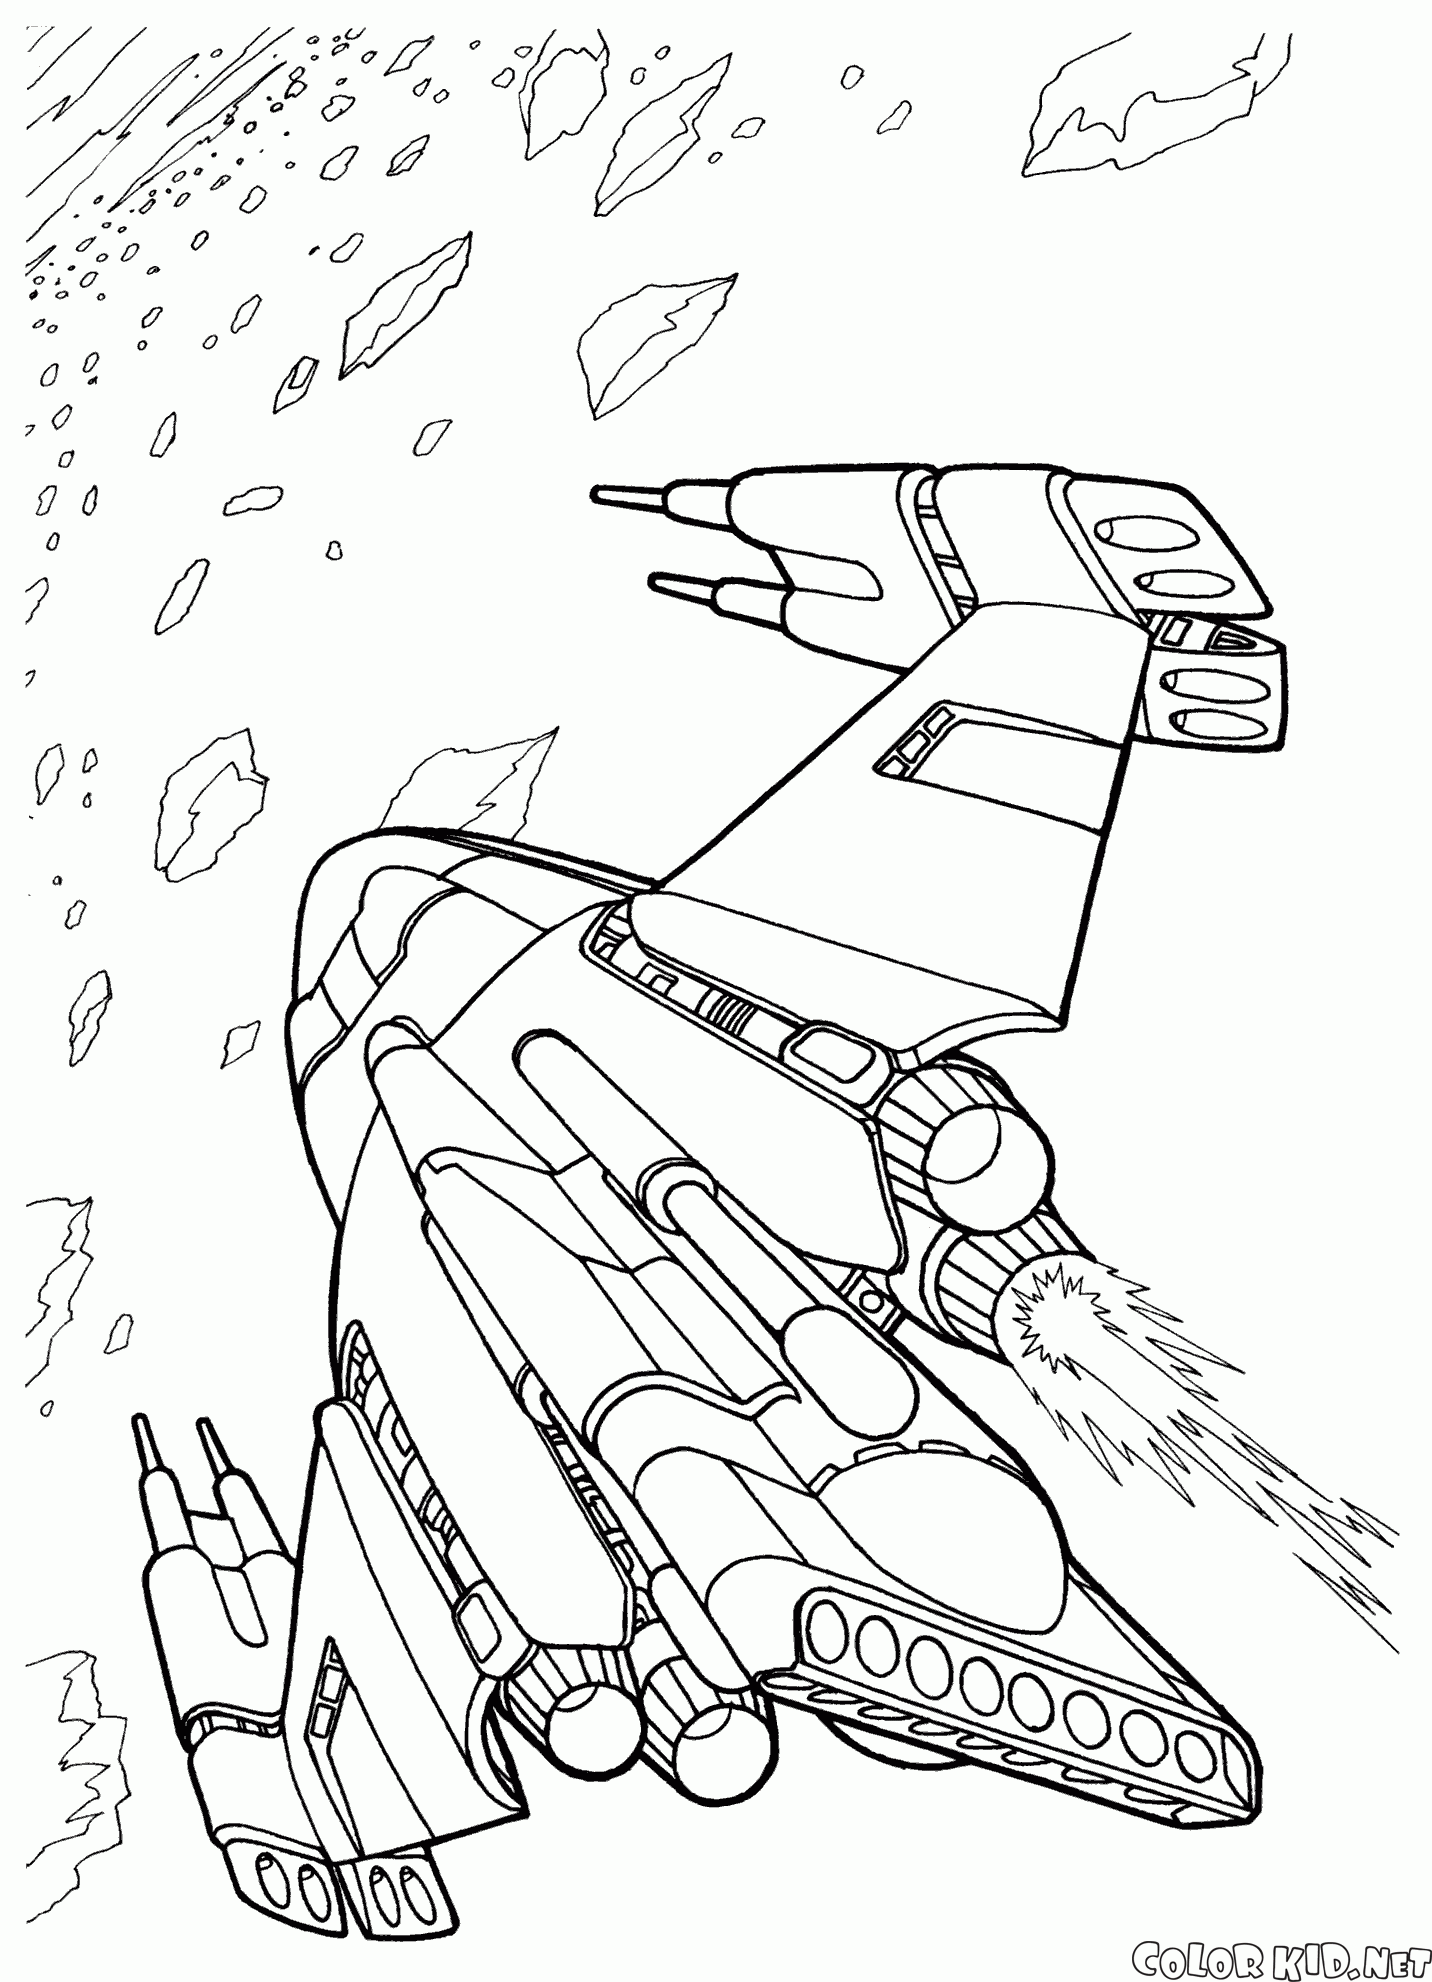 Battle ship in space